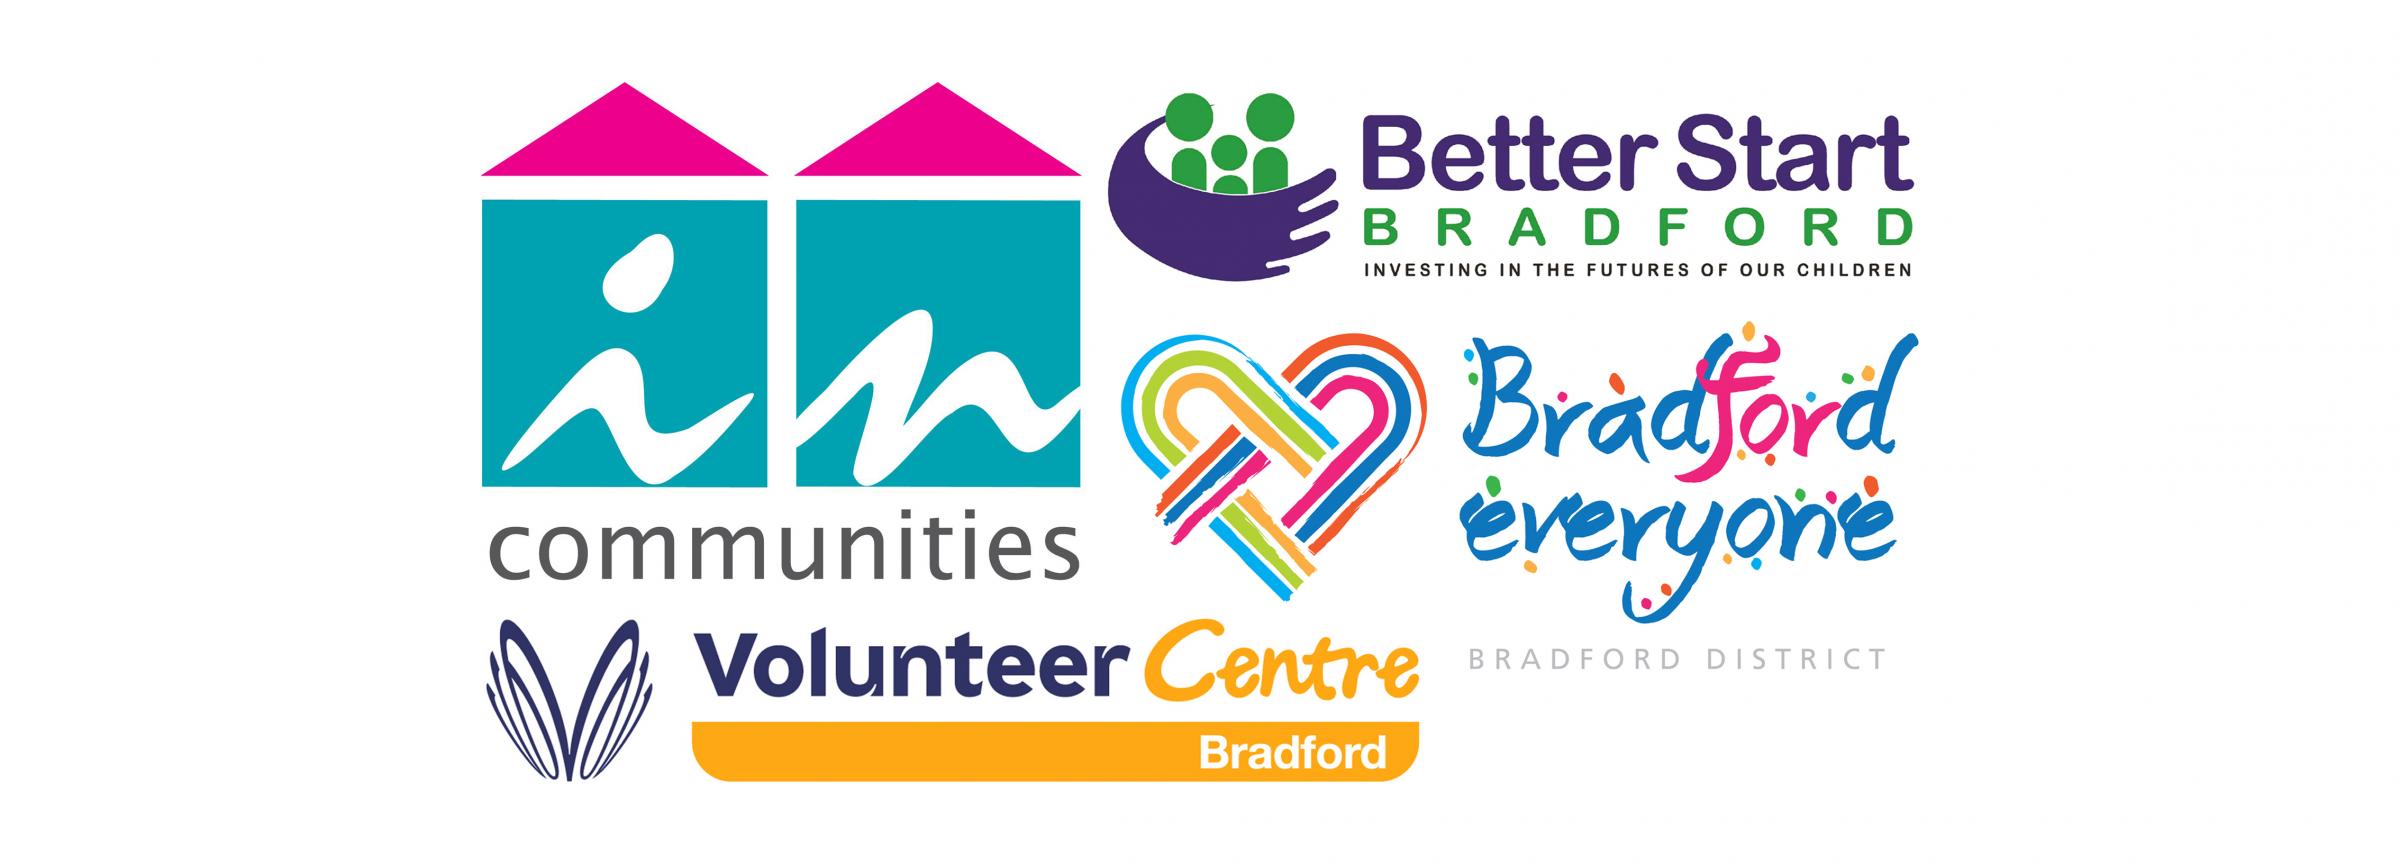 Bradford Telegraph and Argus: Community Stars 2020 sponsors